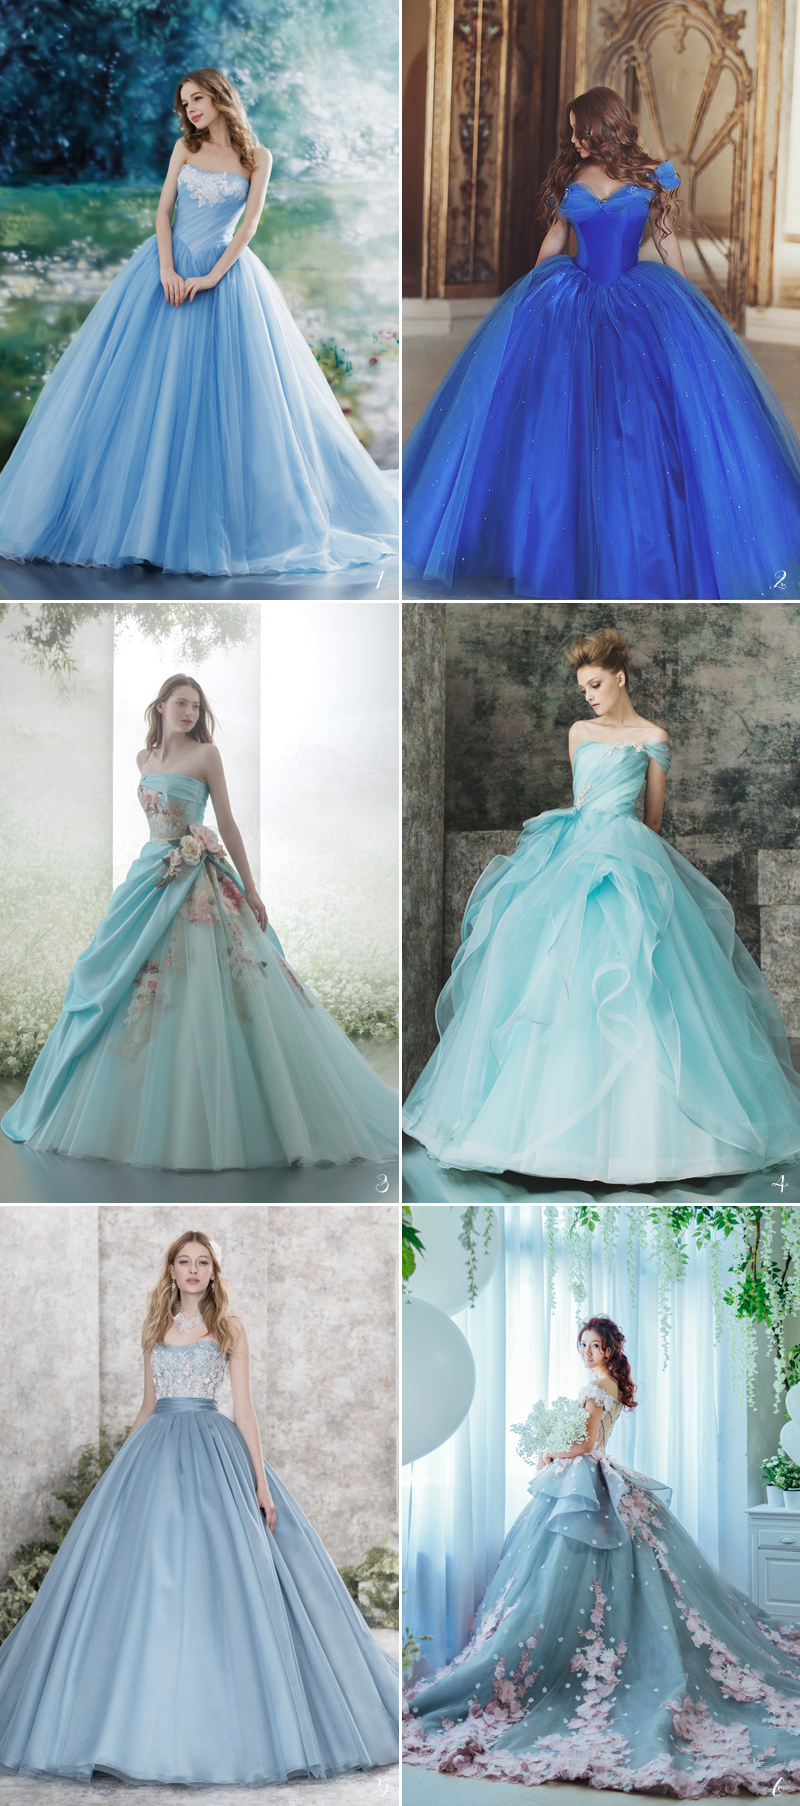 42 Fairy Tale Wedding Dresses For The Disney Princess Bride! - Praise